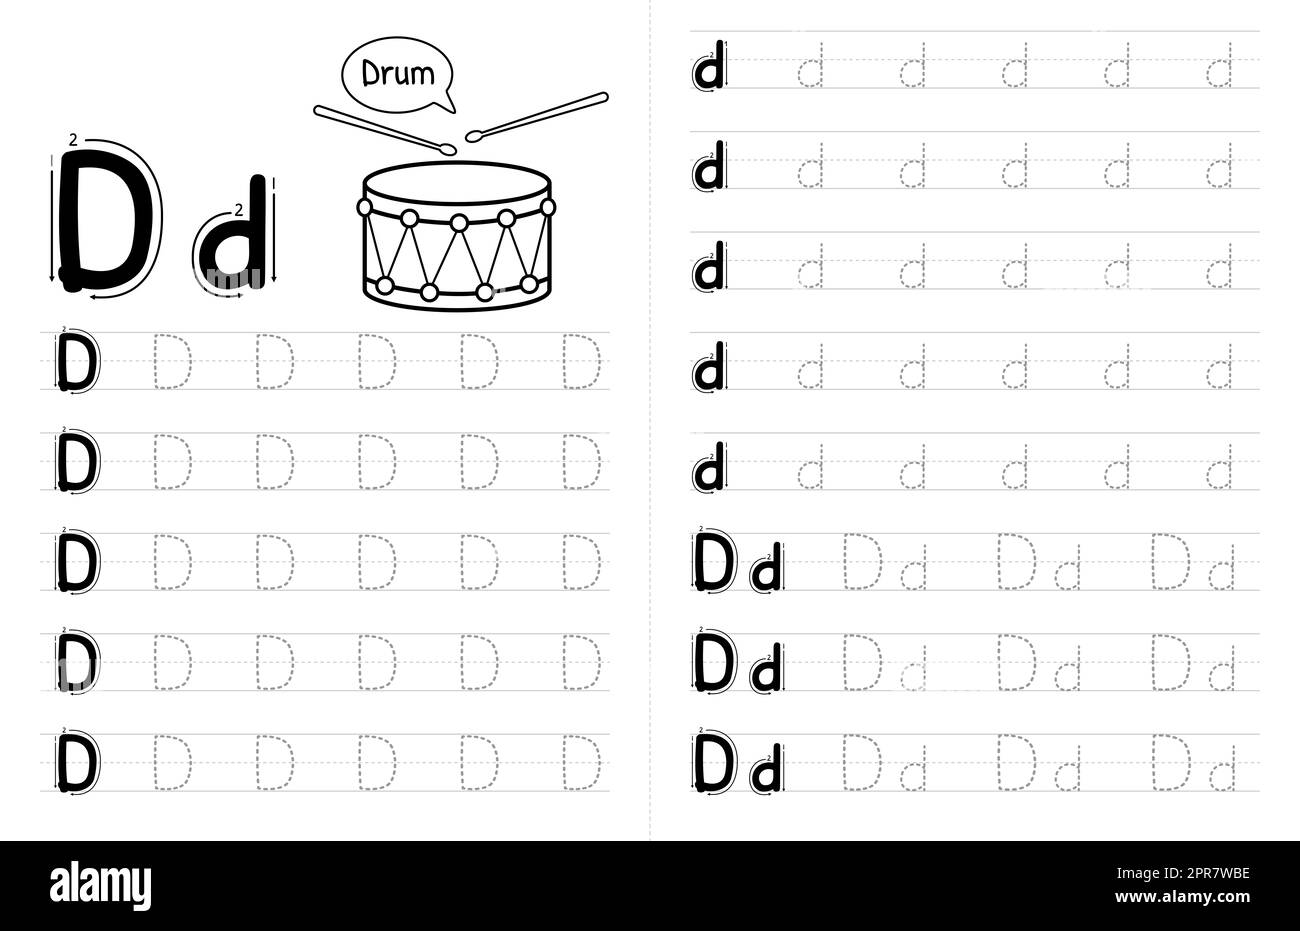 Alphabet Handwriting Practice Workbook for Kids Preschool Writing: Tracing Alphabet for Preschoolers, Kindergarten and Kids Ages 3-5 - ABC Tracing Paper Sheets [Book]